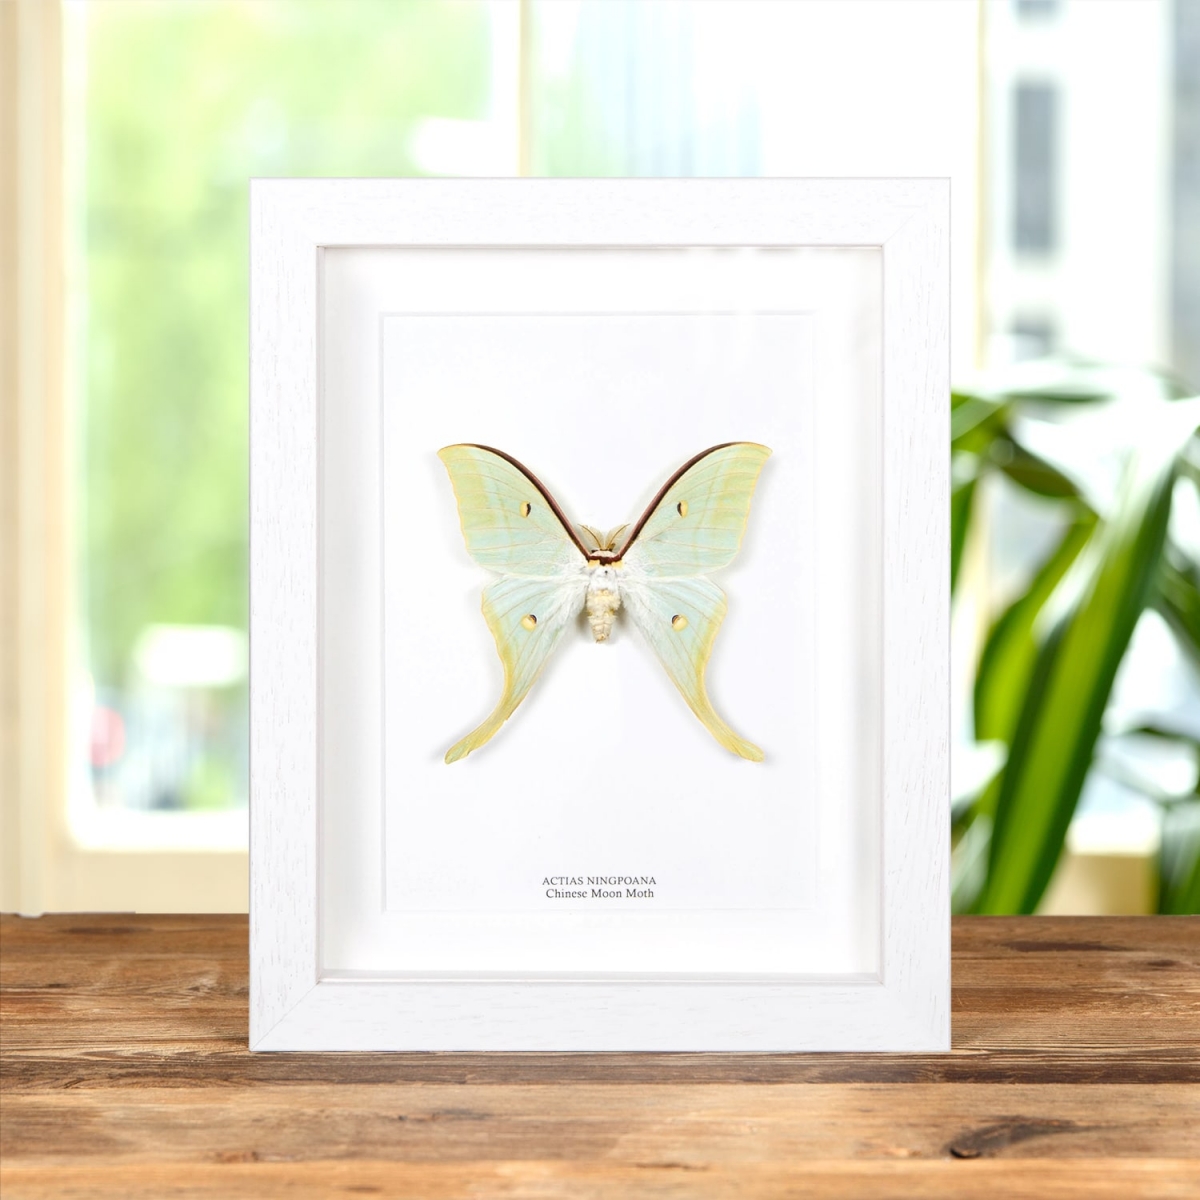 Chinese Moon Moth in Box Frame (Actias ningpoana)